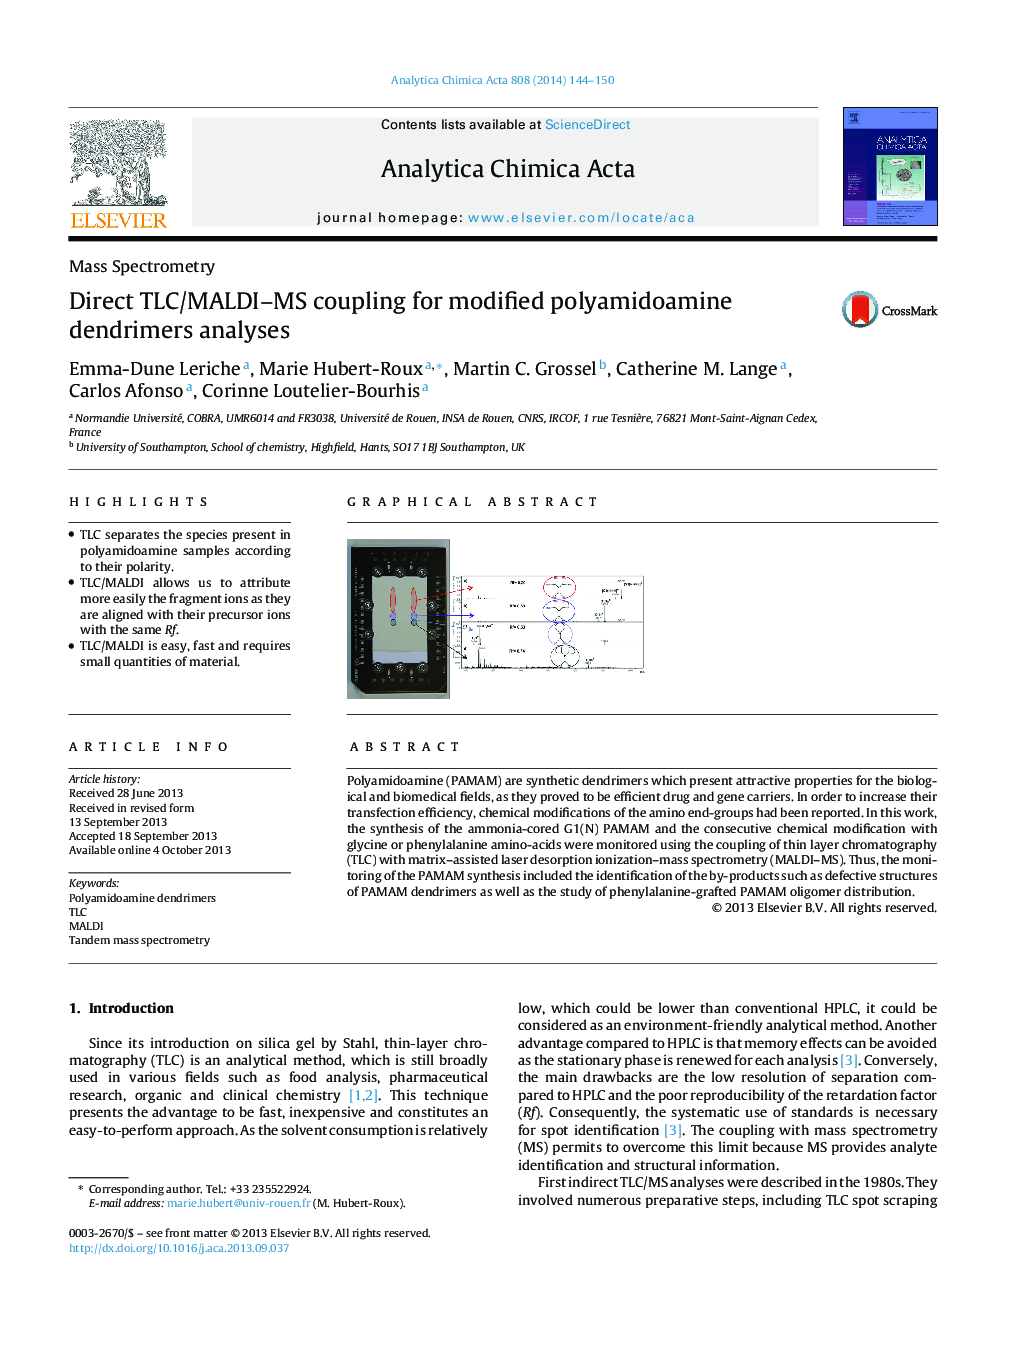 Direct TLC/MALDI–MS coupling for modified polyamidoamine dendrimers analyses